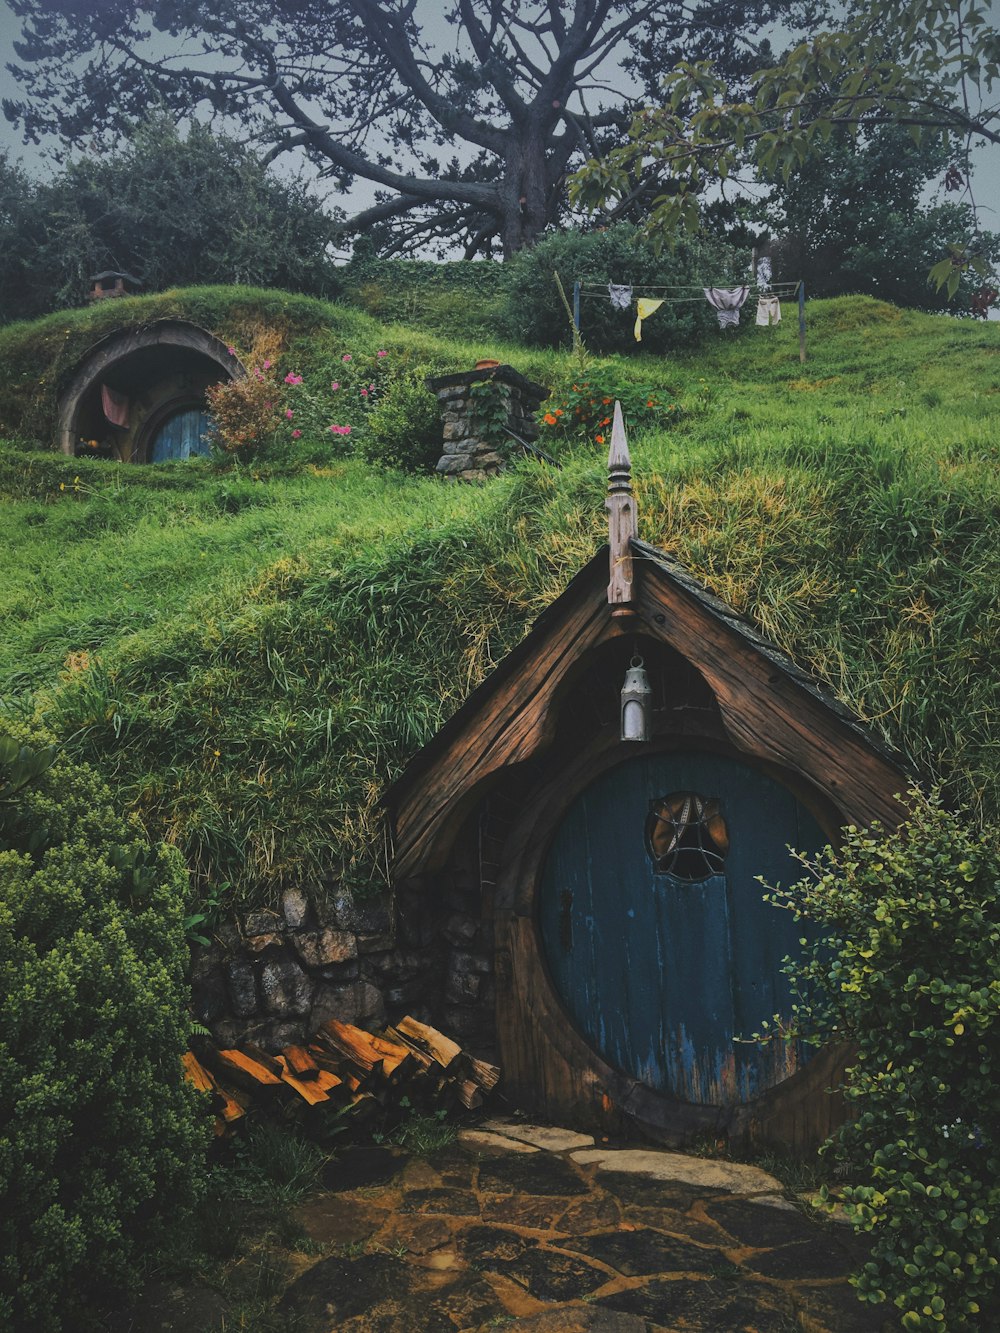 The Hobbit house